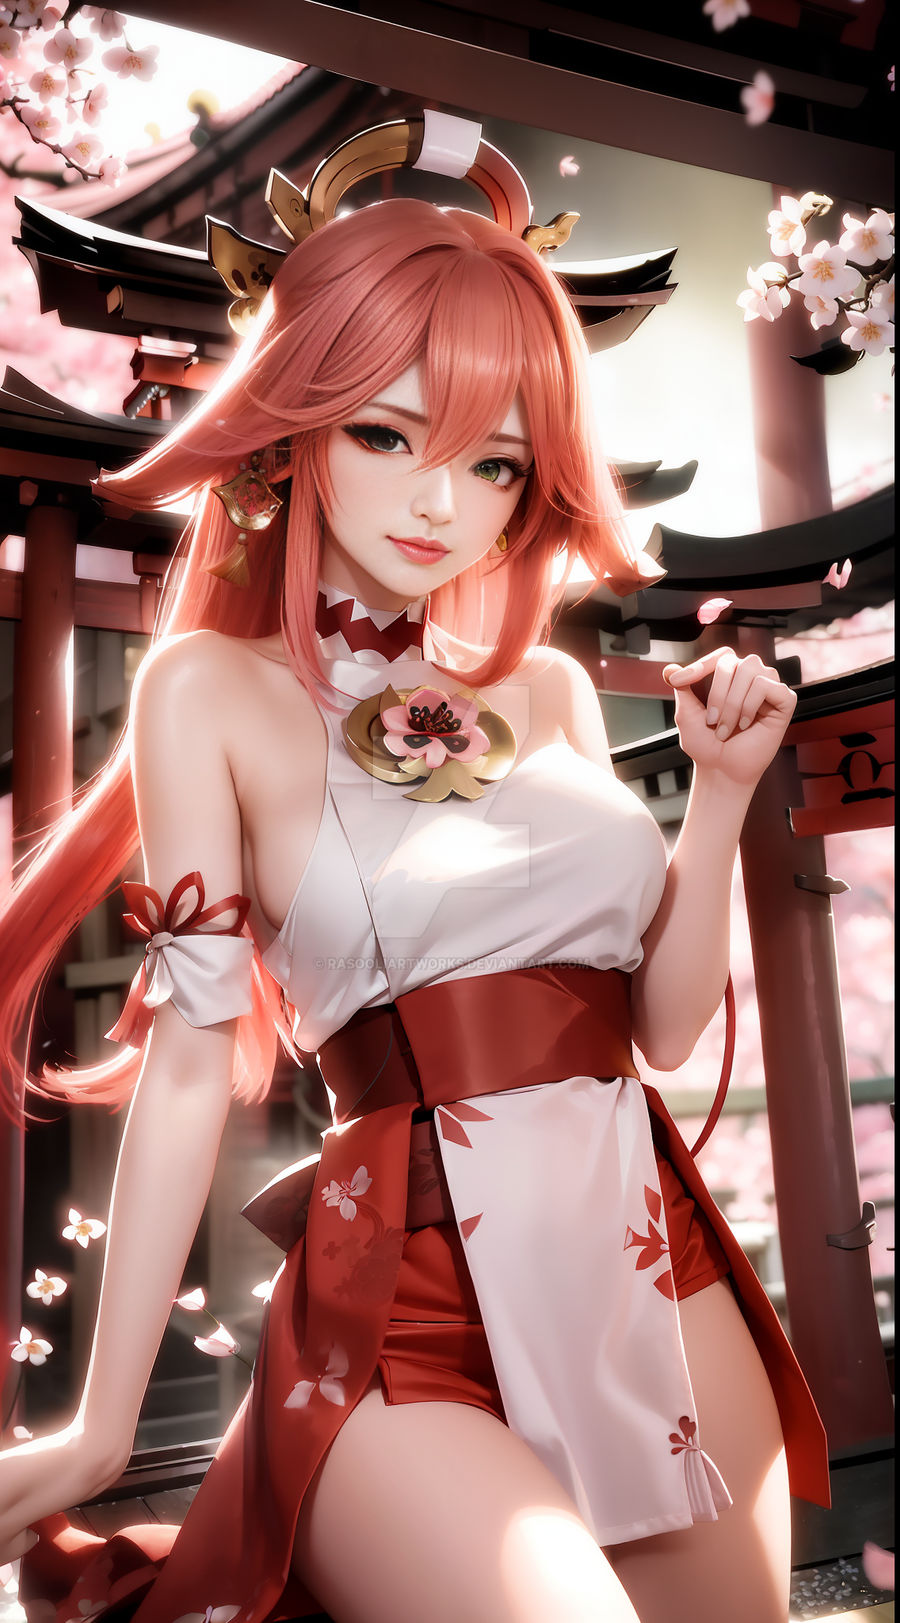 Beautiful Anime Girl Artwork by RasooliArtworks on DeviantArt